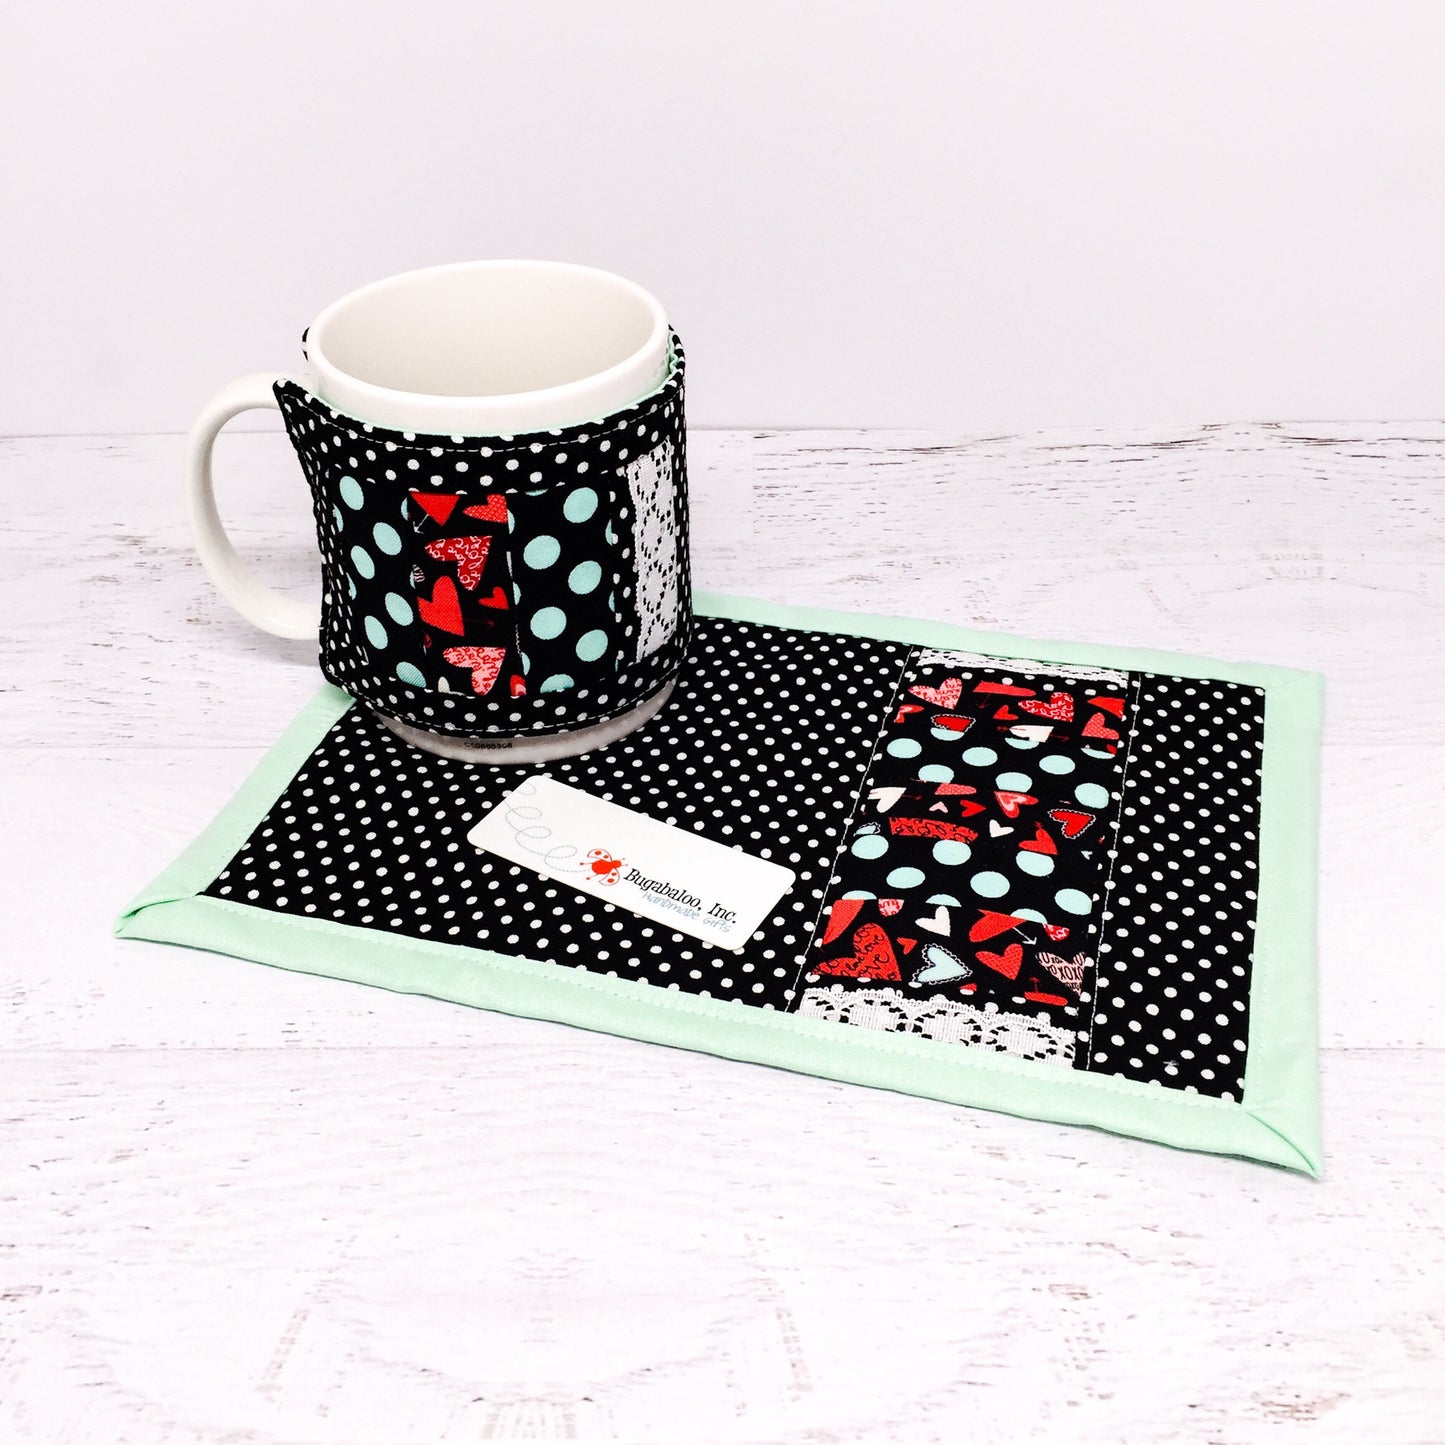 Mug Rug and Mug Cozy Gift Set - Valentine's Day Hearts and Polka Dots